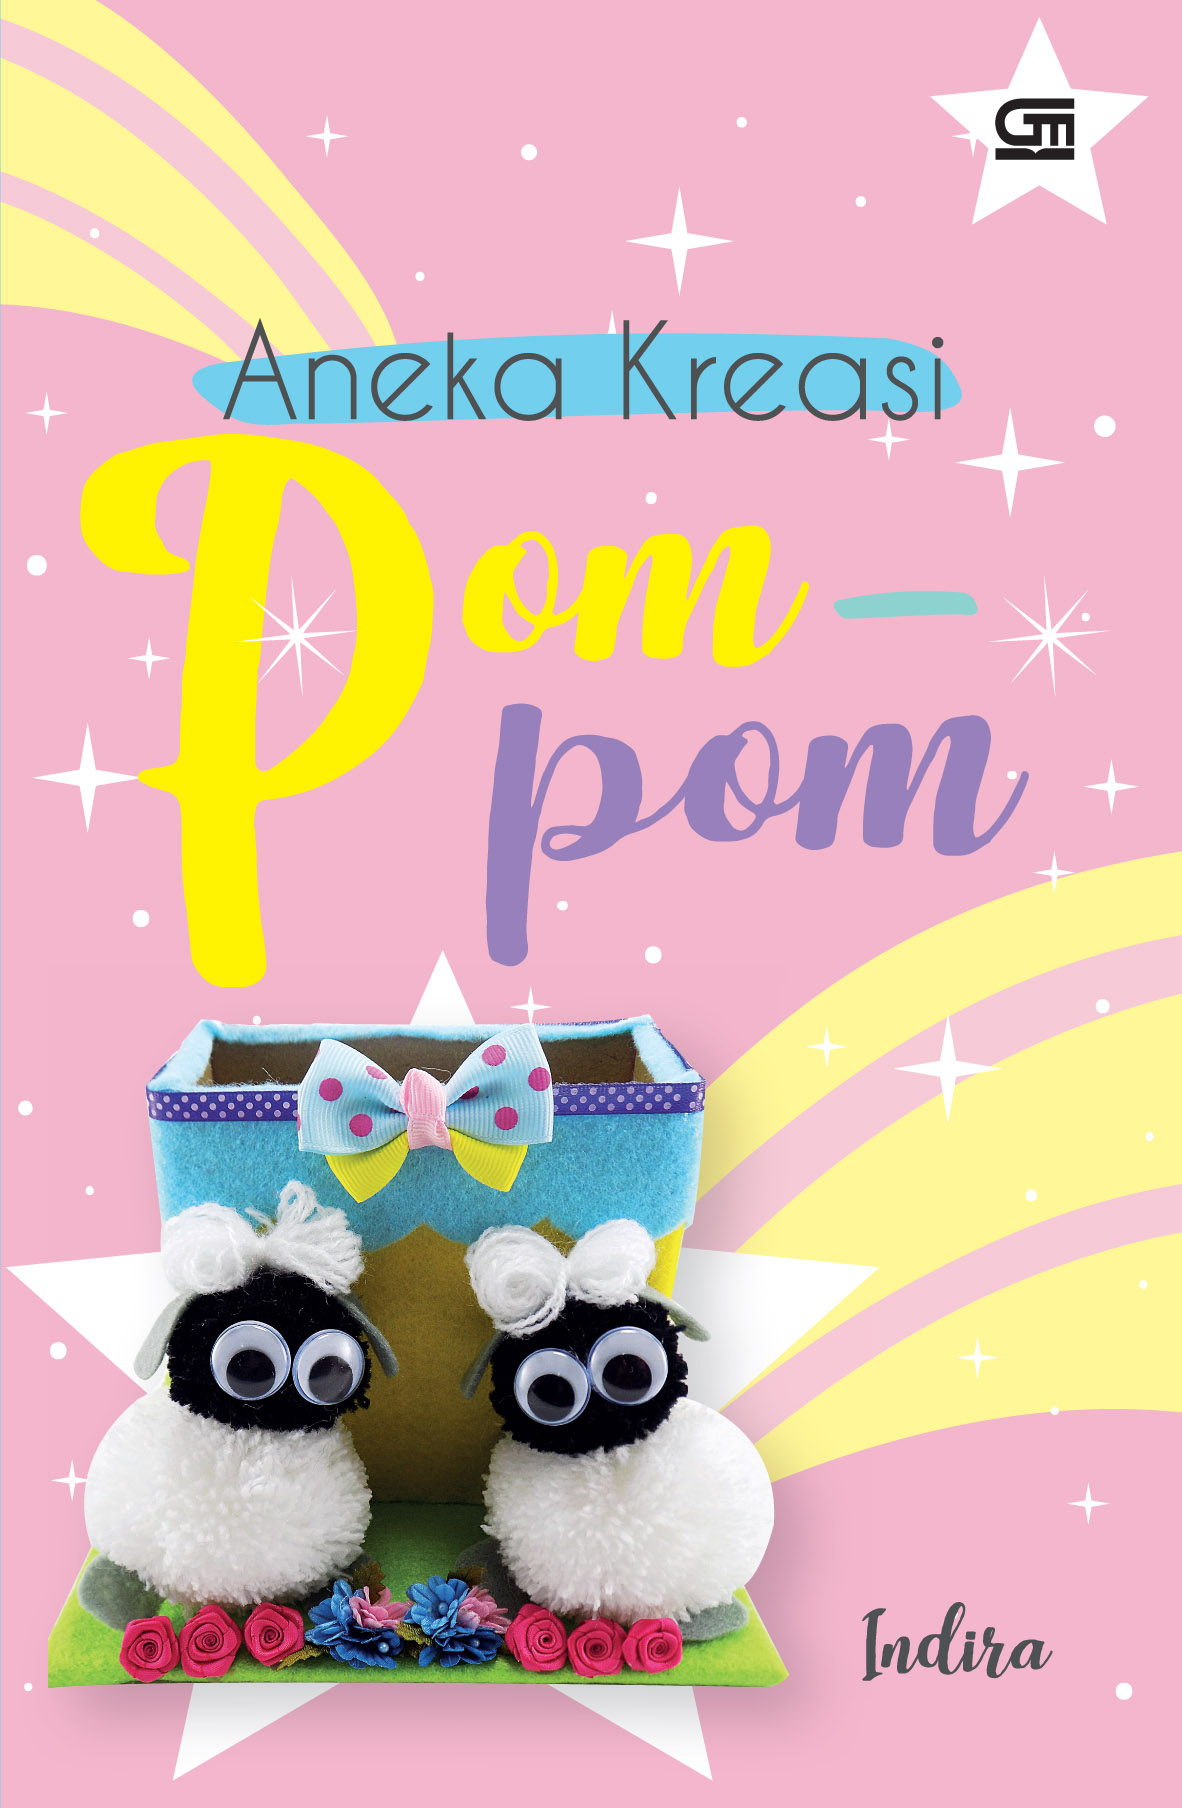 Aneka Kreasi Pom - Pom